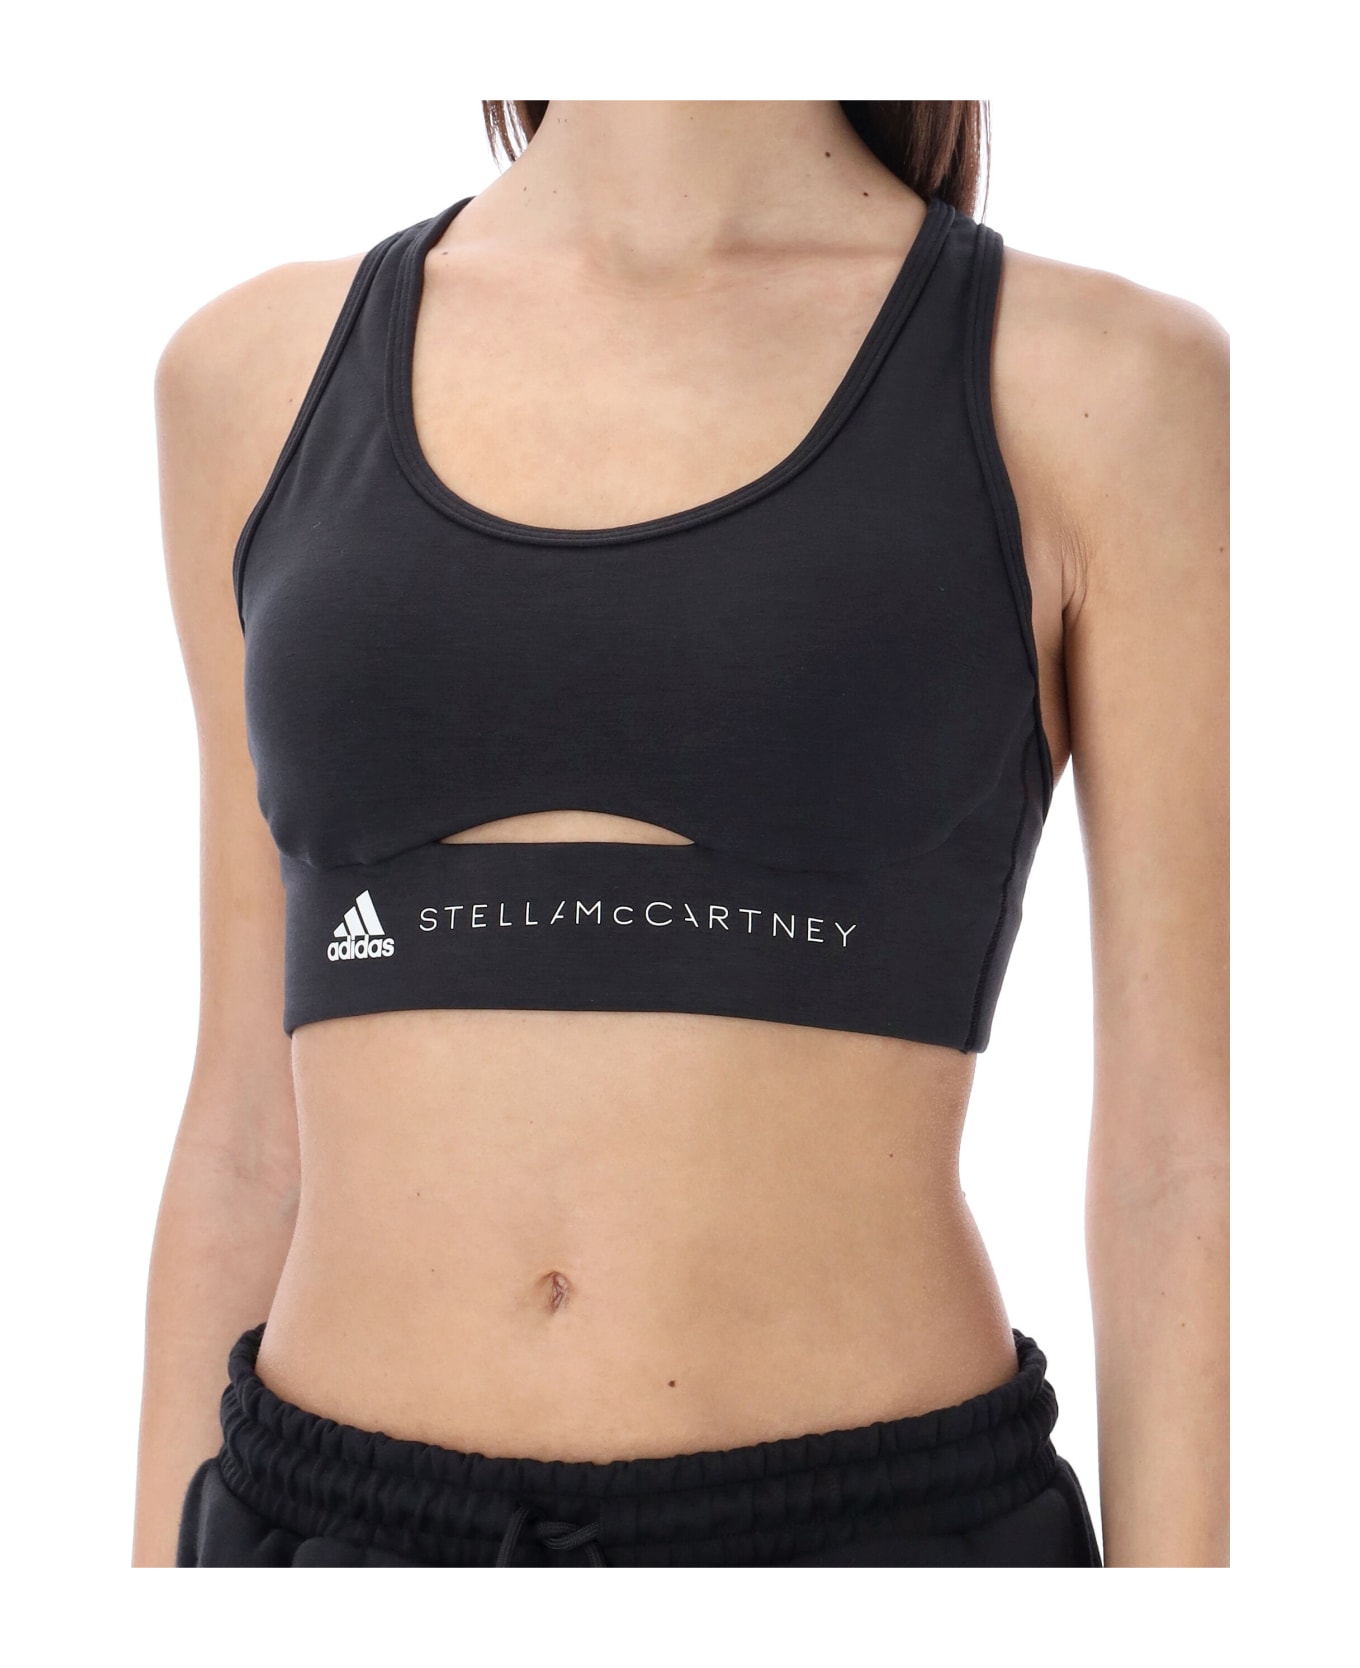 Adidas by Stella McCartney Truestrength Yoga Medium Support Sports Bra - Black/white ボトムス